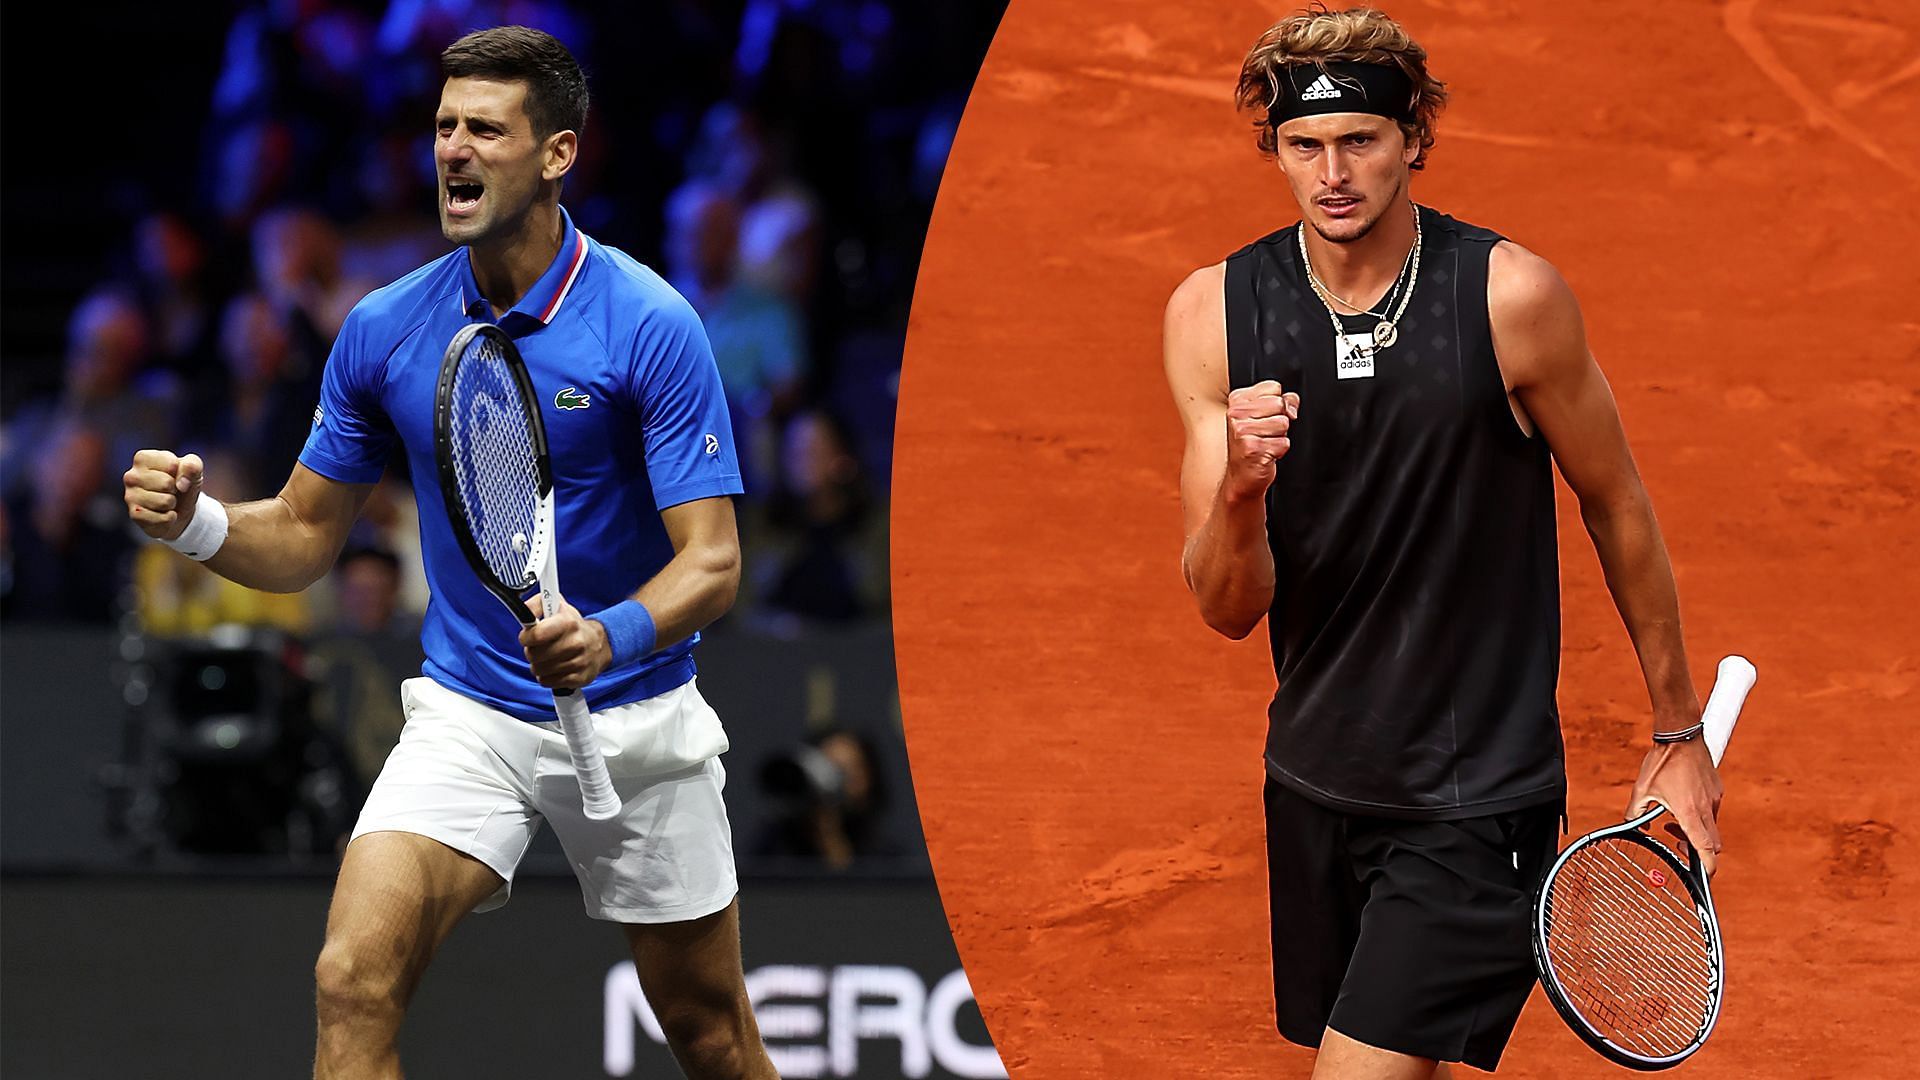 Novak Djokovic vs Alexander Zverev: Where to watch, TV schedule, live streaming details and more | World Tennis League 2022